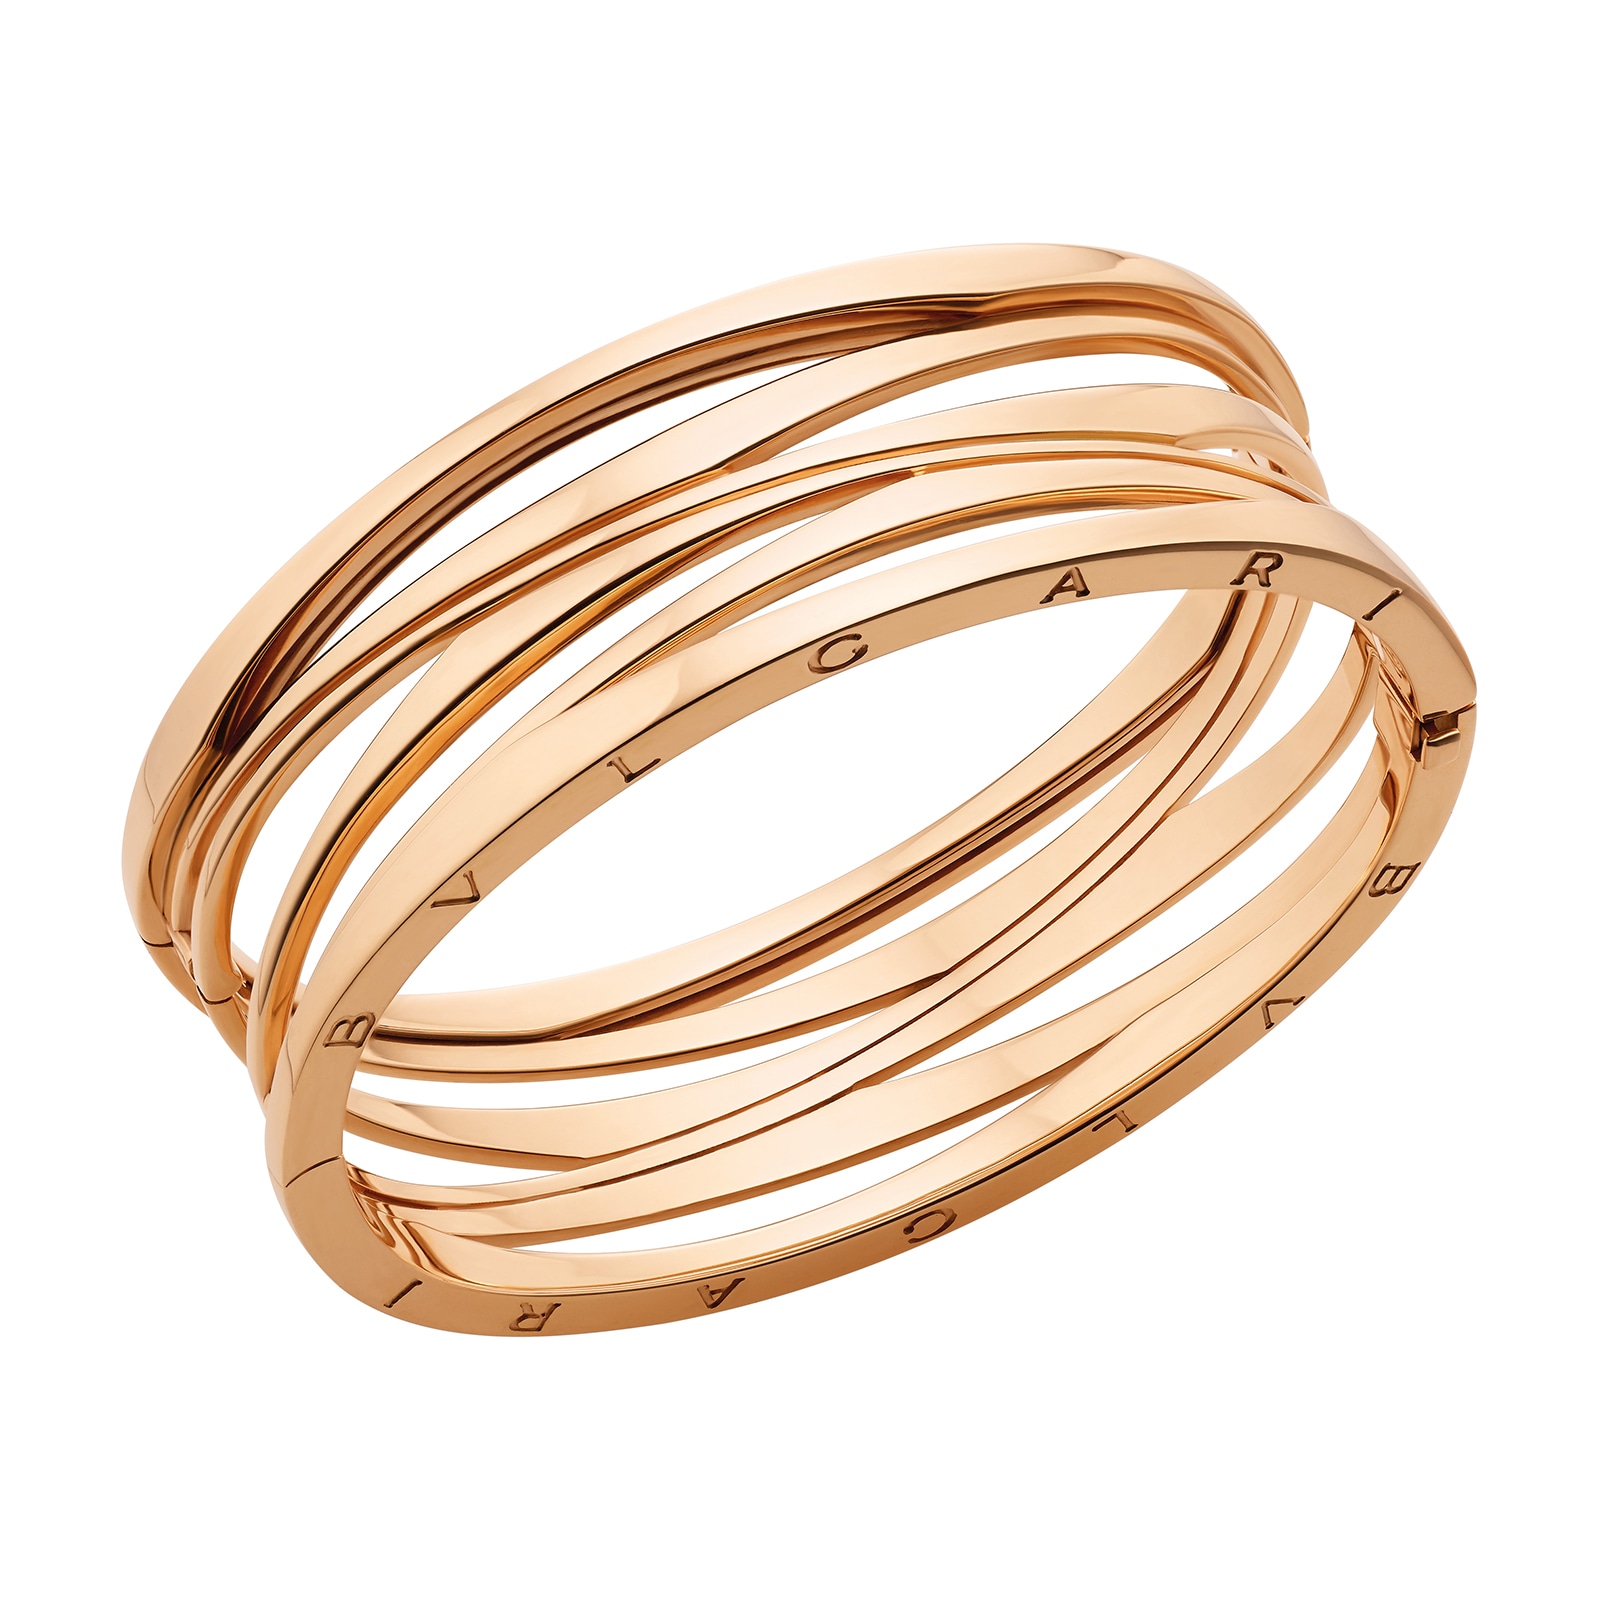 18k Rose Gold B.ZERO1 Bracelet - Size Medium